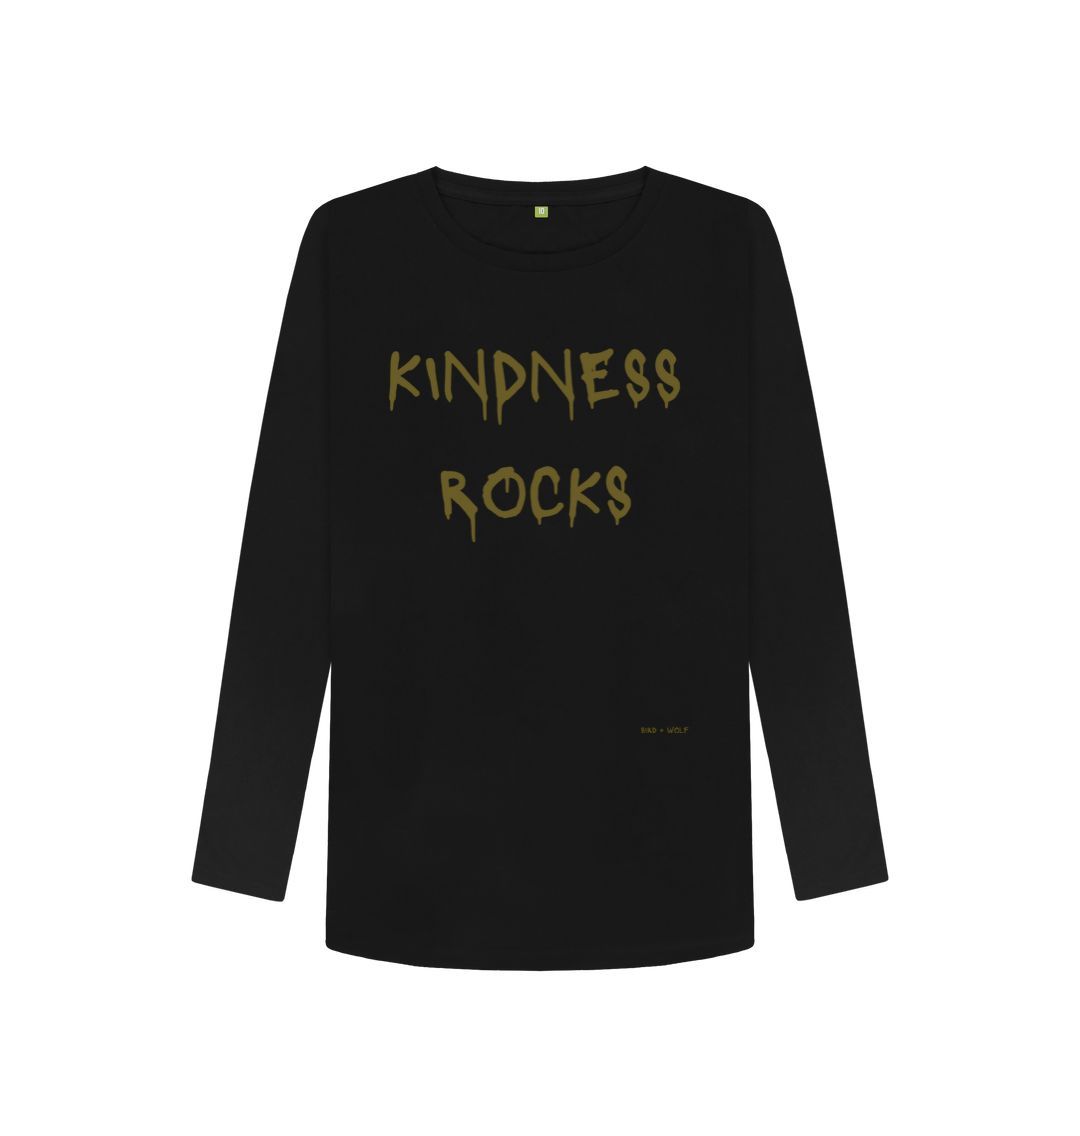 Black Kindness Rocks Long Sleeve T Shirt